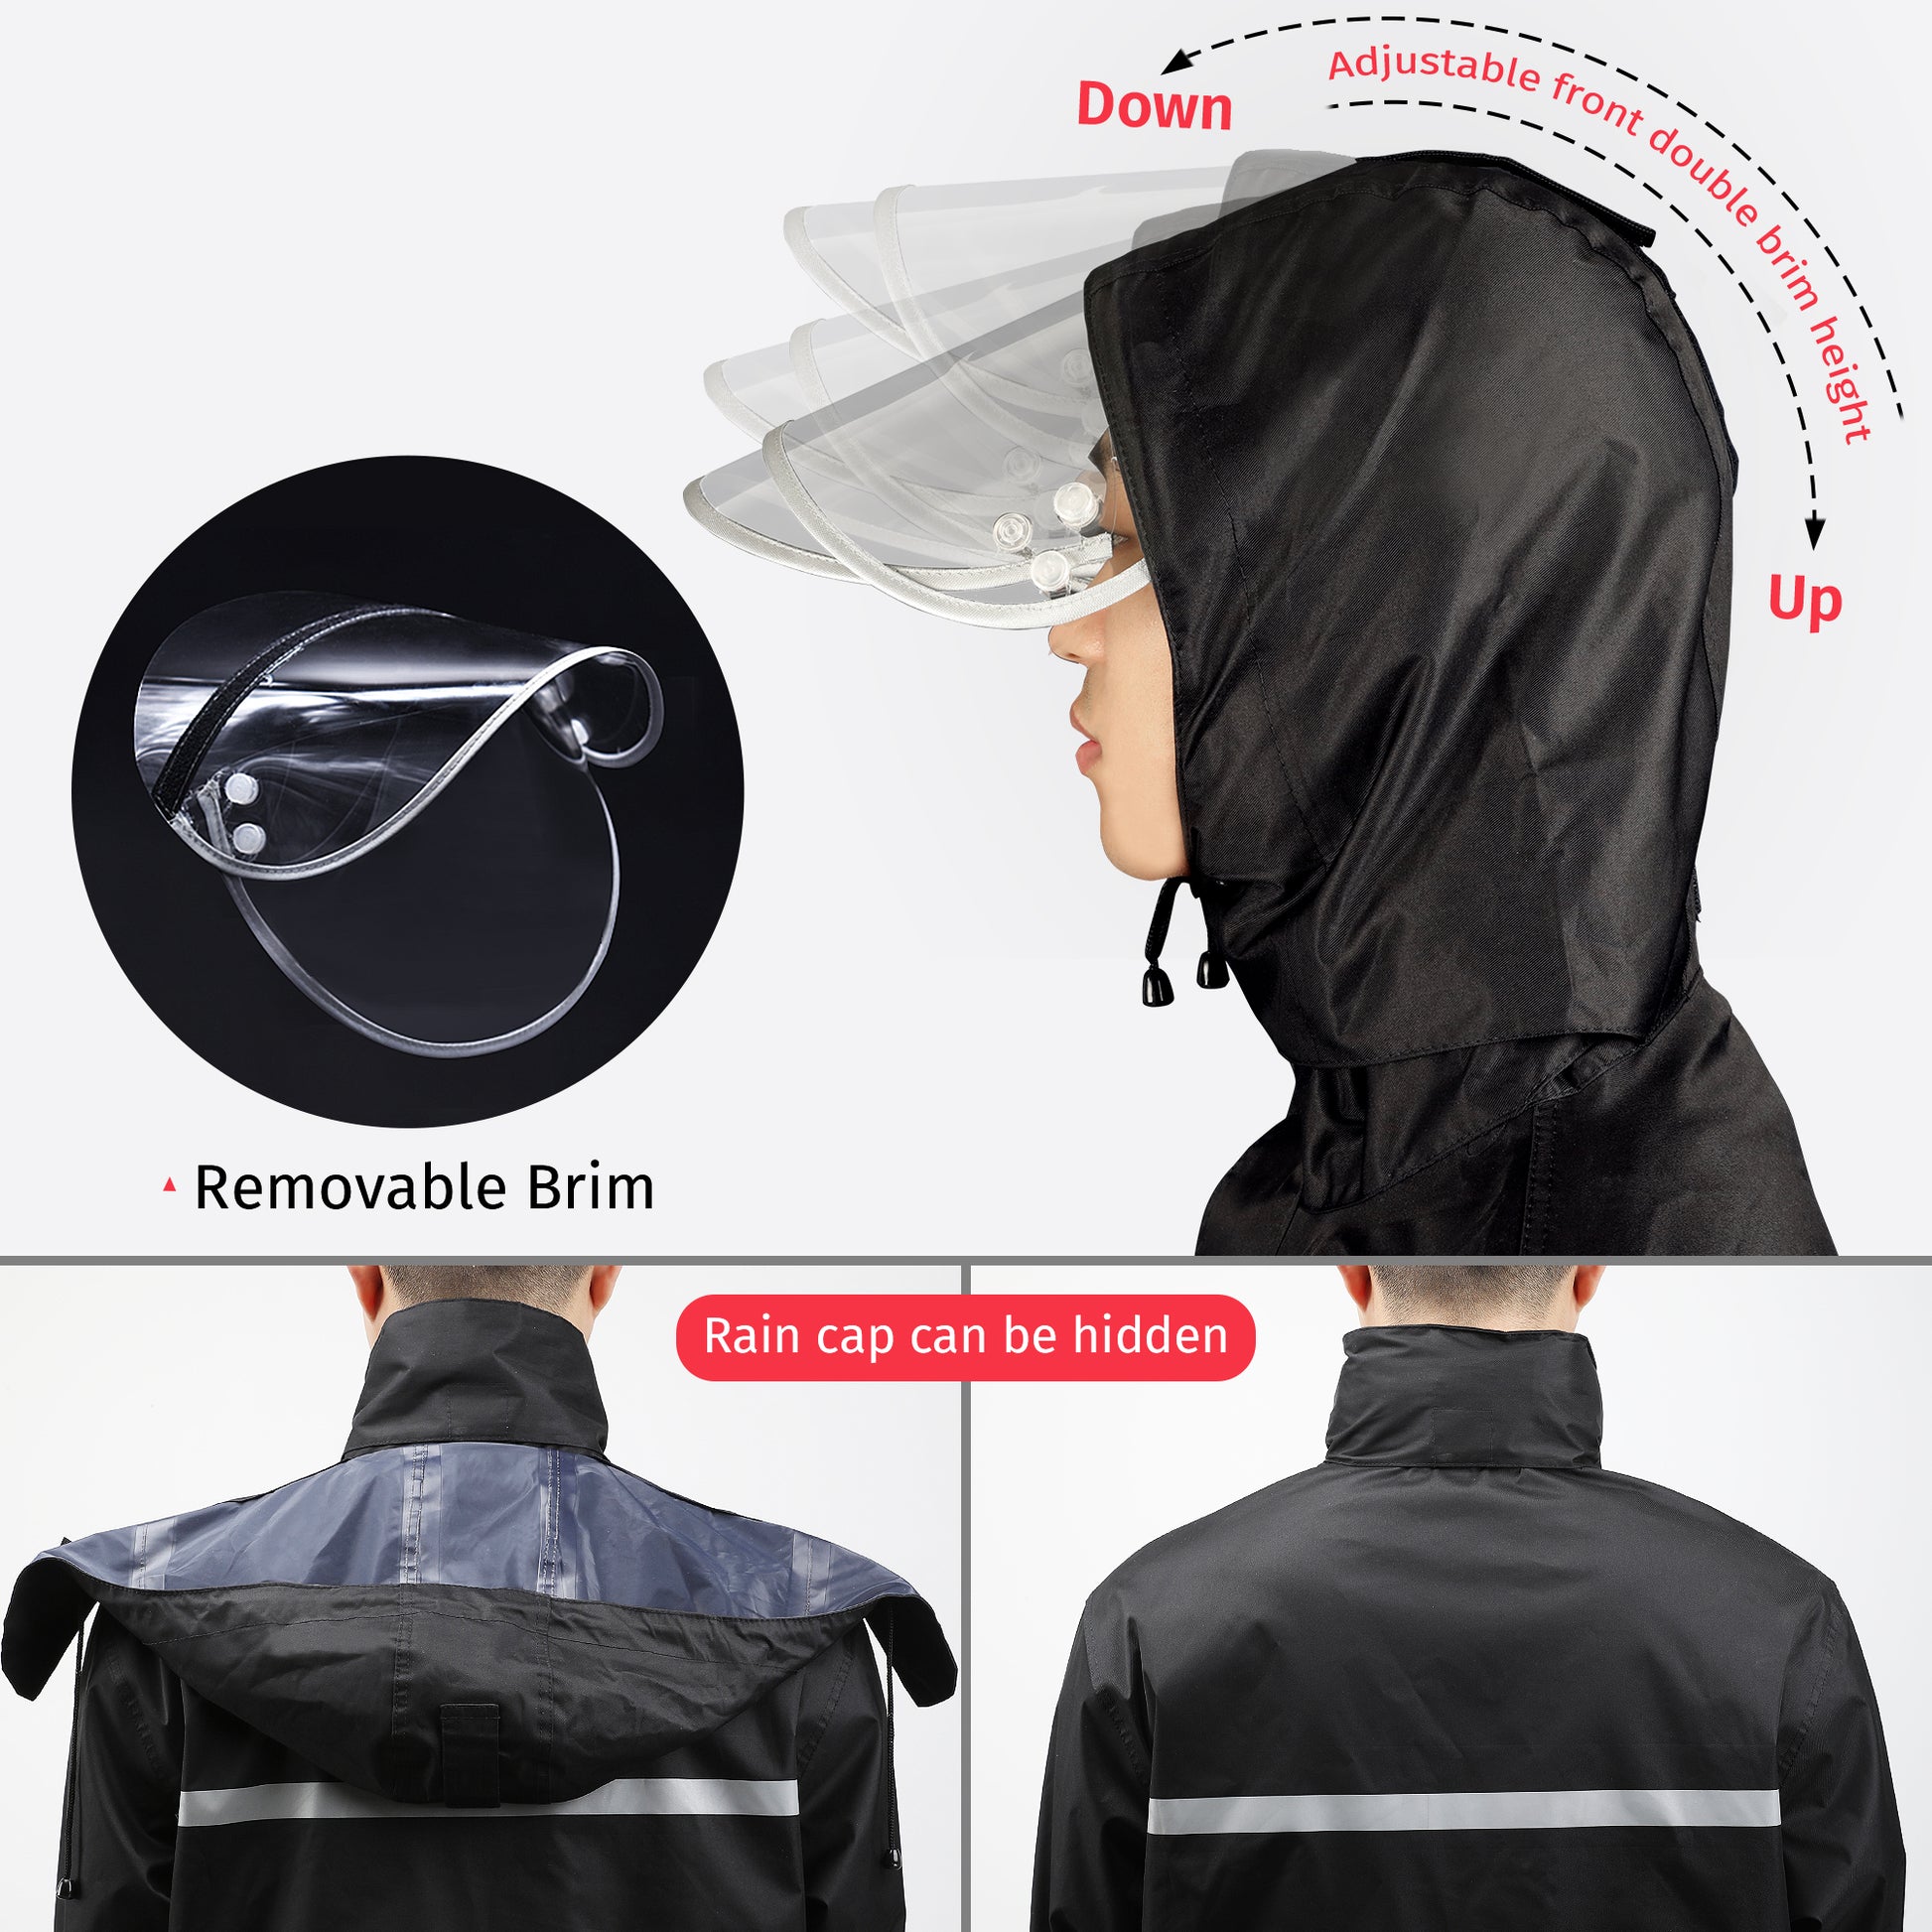  iCreek Motorcycle Rain Suits for Men & Women Waterproof  Anti-storm Raincoat High Visibility Rain Gear for Cycling, Golf, Fishing, S  : Automotive